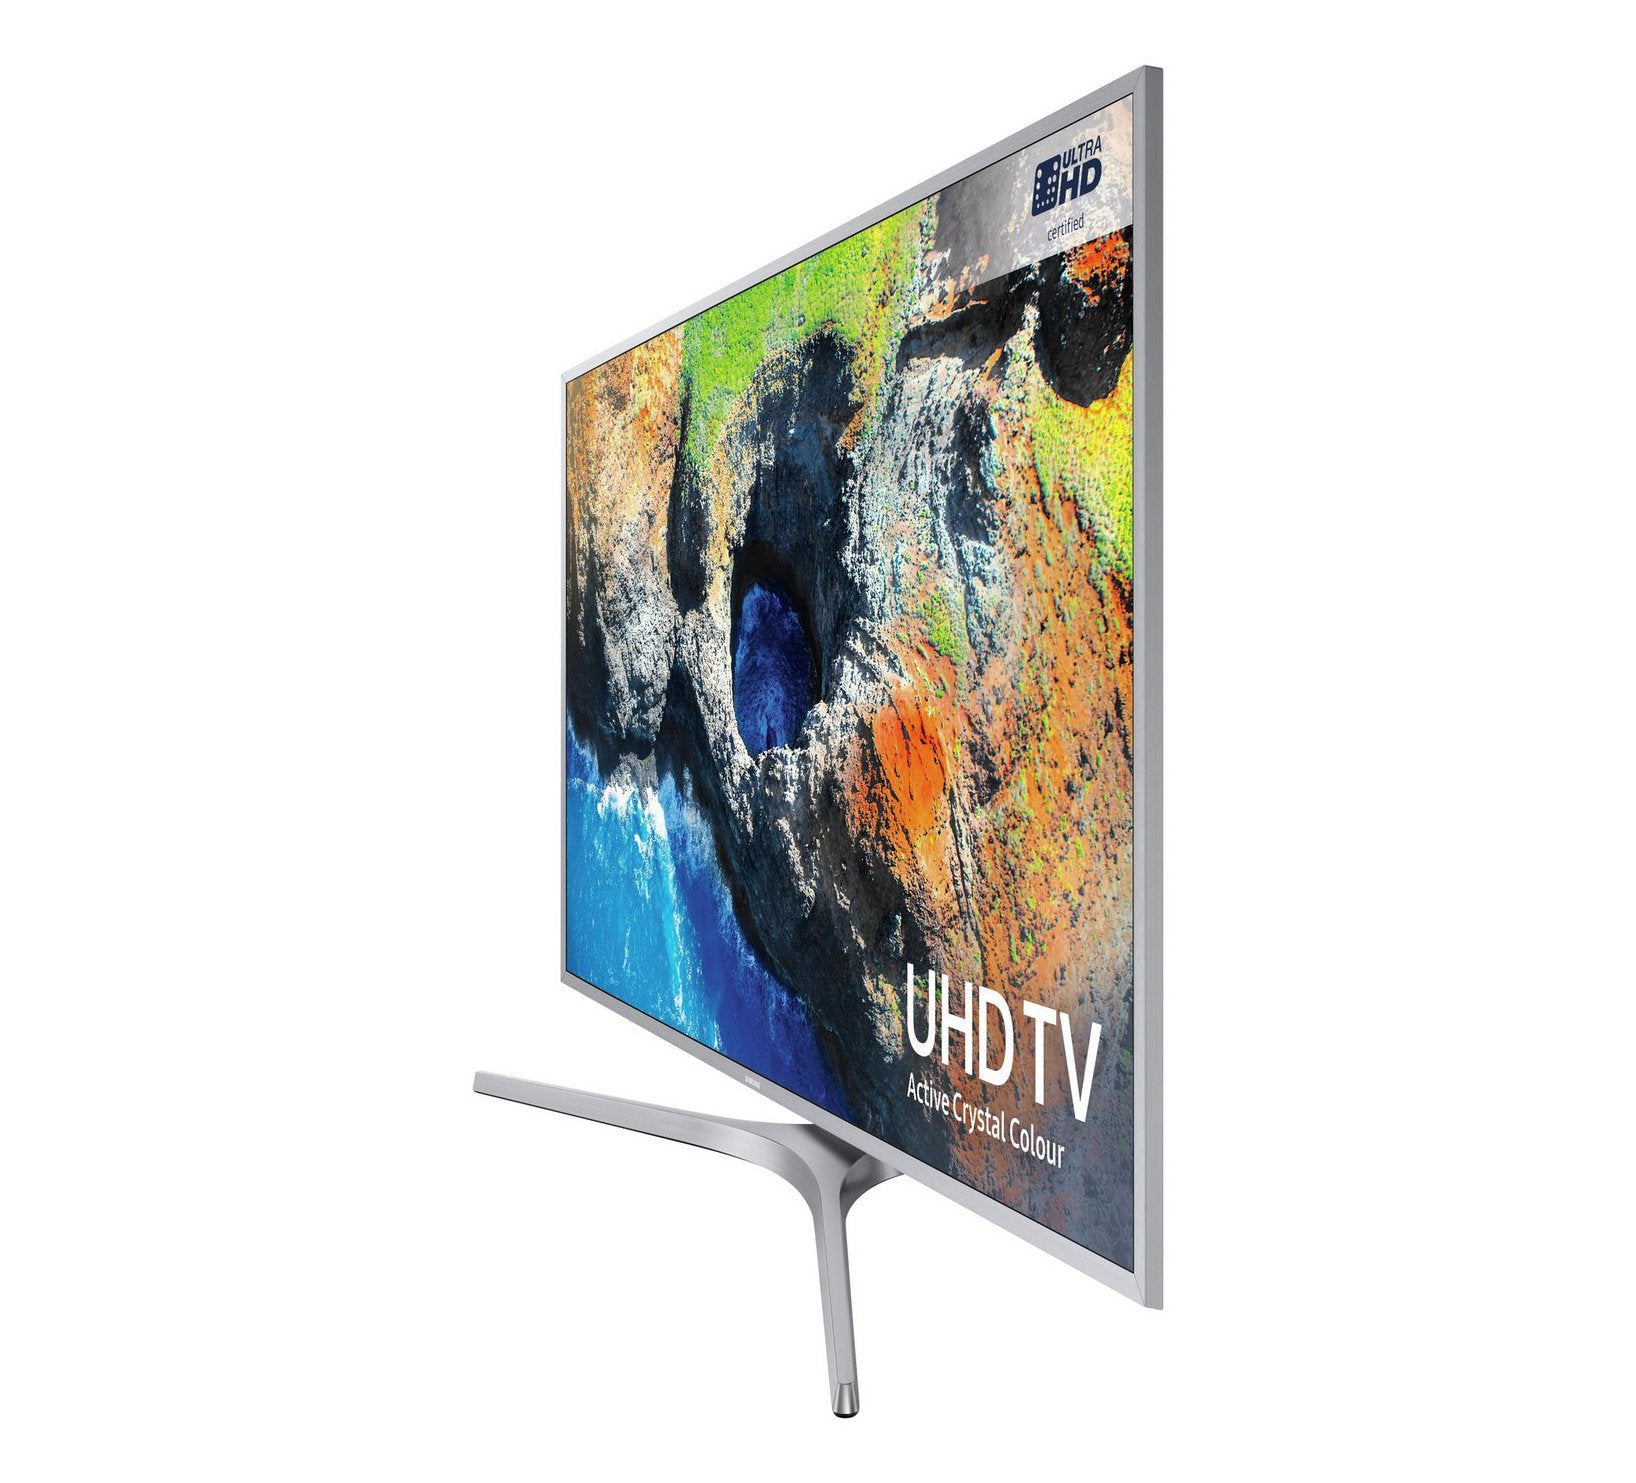 Televisor Samsung Crystal UHD de 40